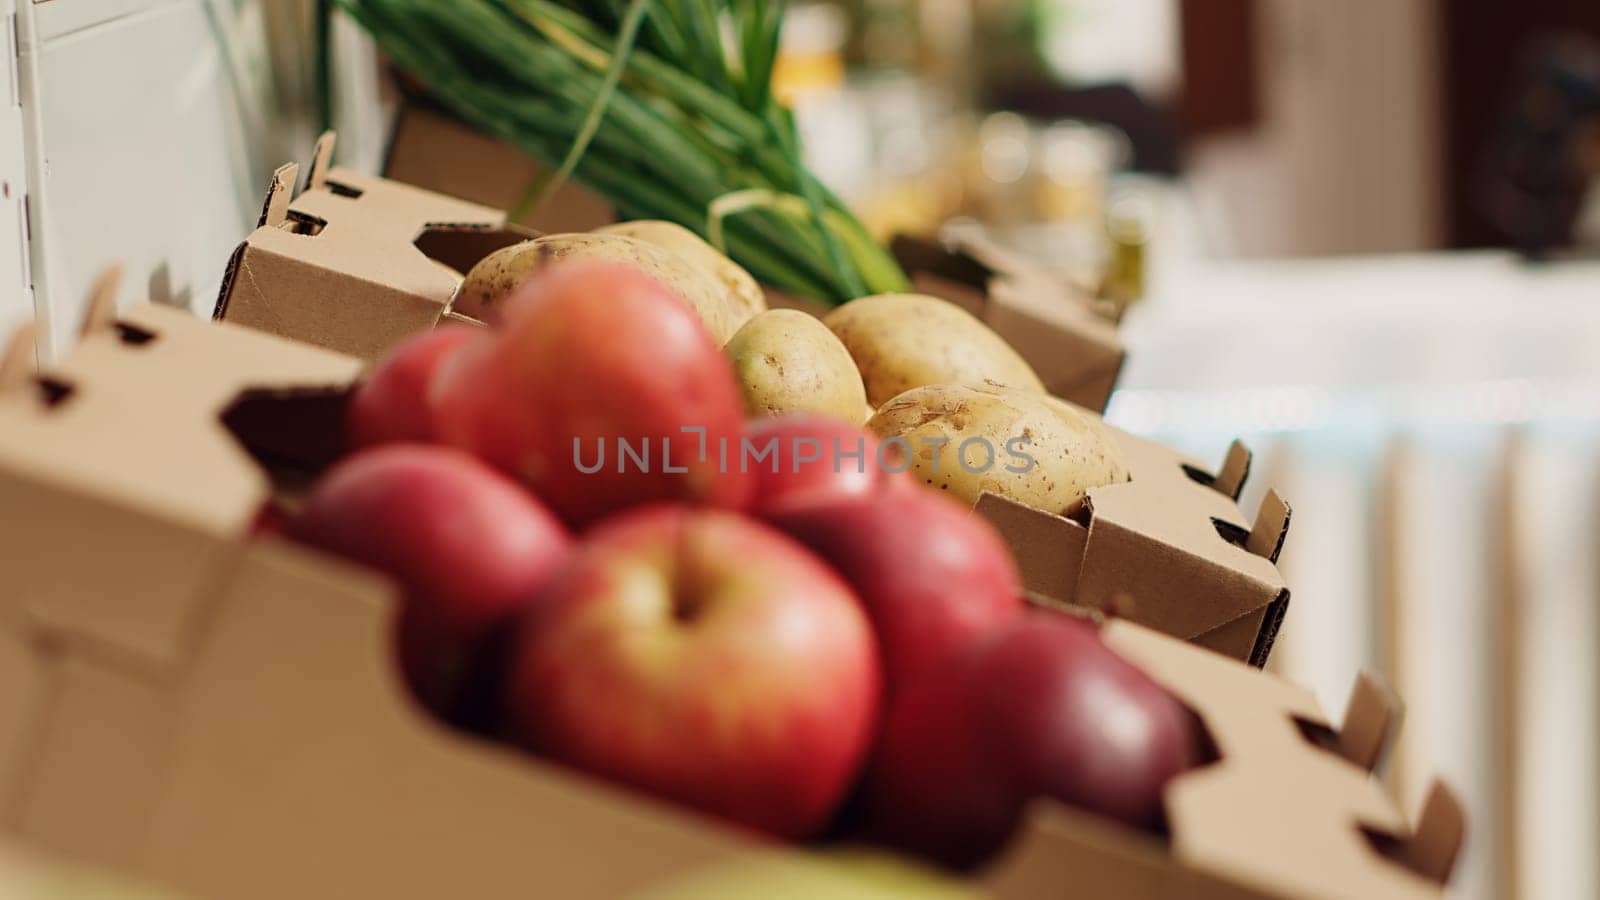 Vegetables on eco farmers market shelves by DCStudio